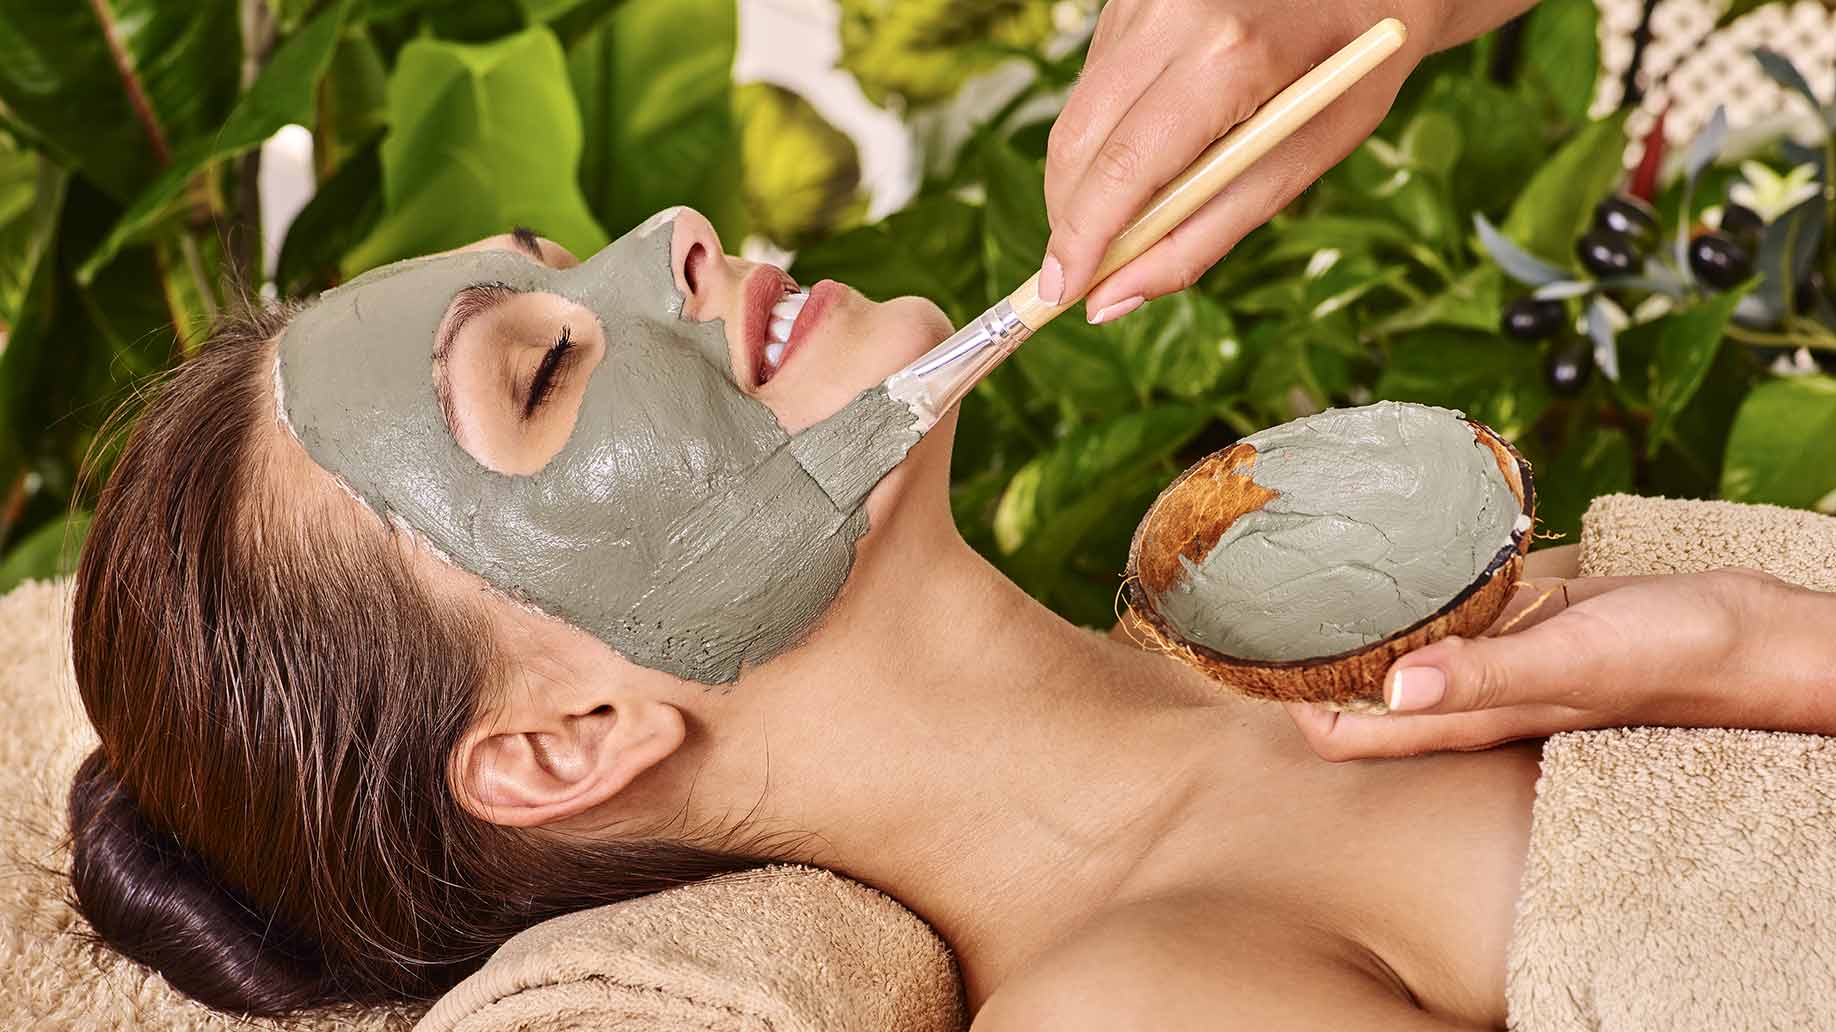 Cleansing homeade natural facial masks